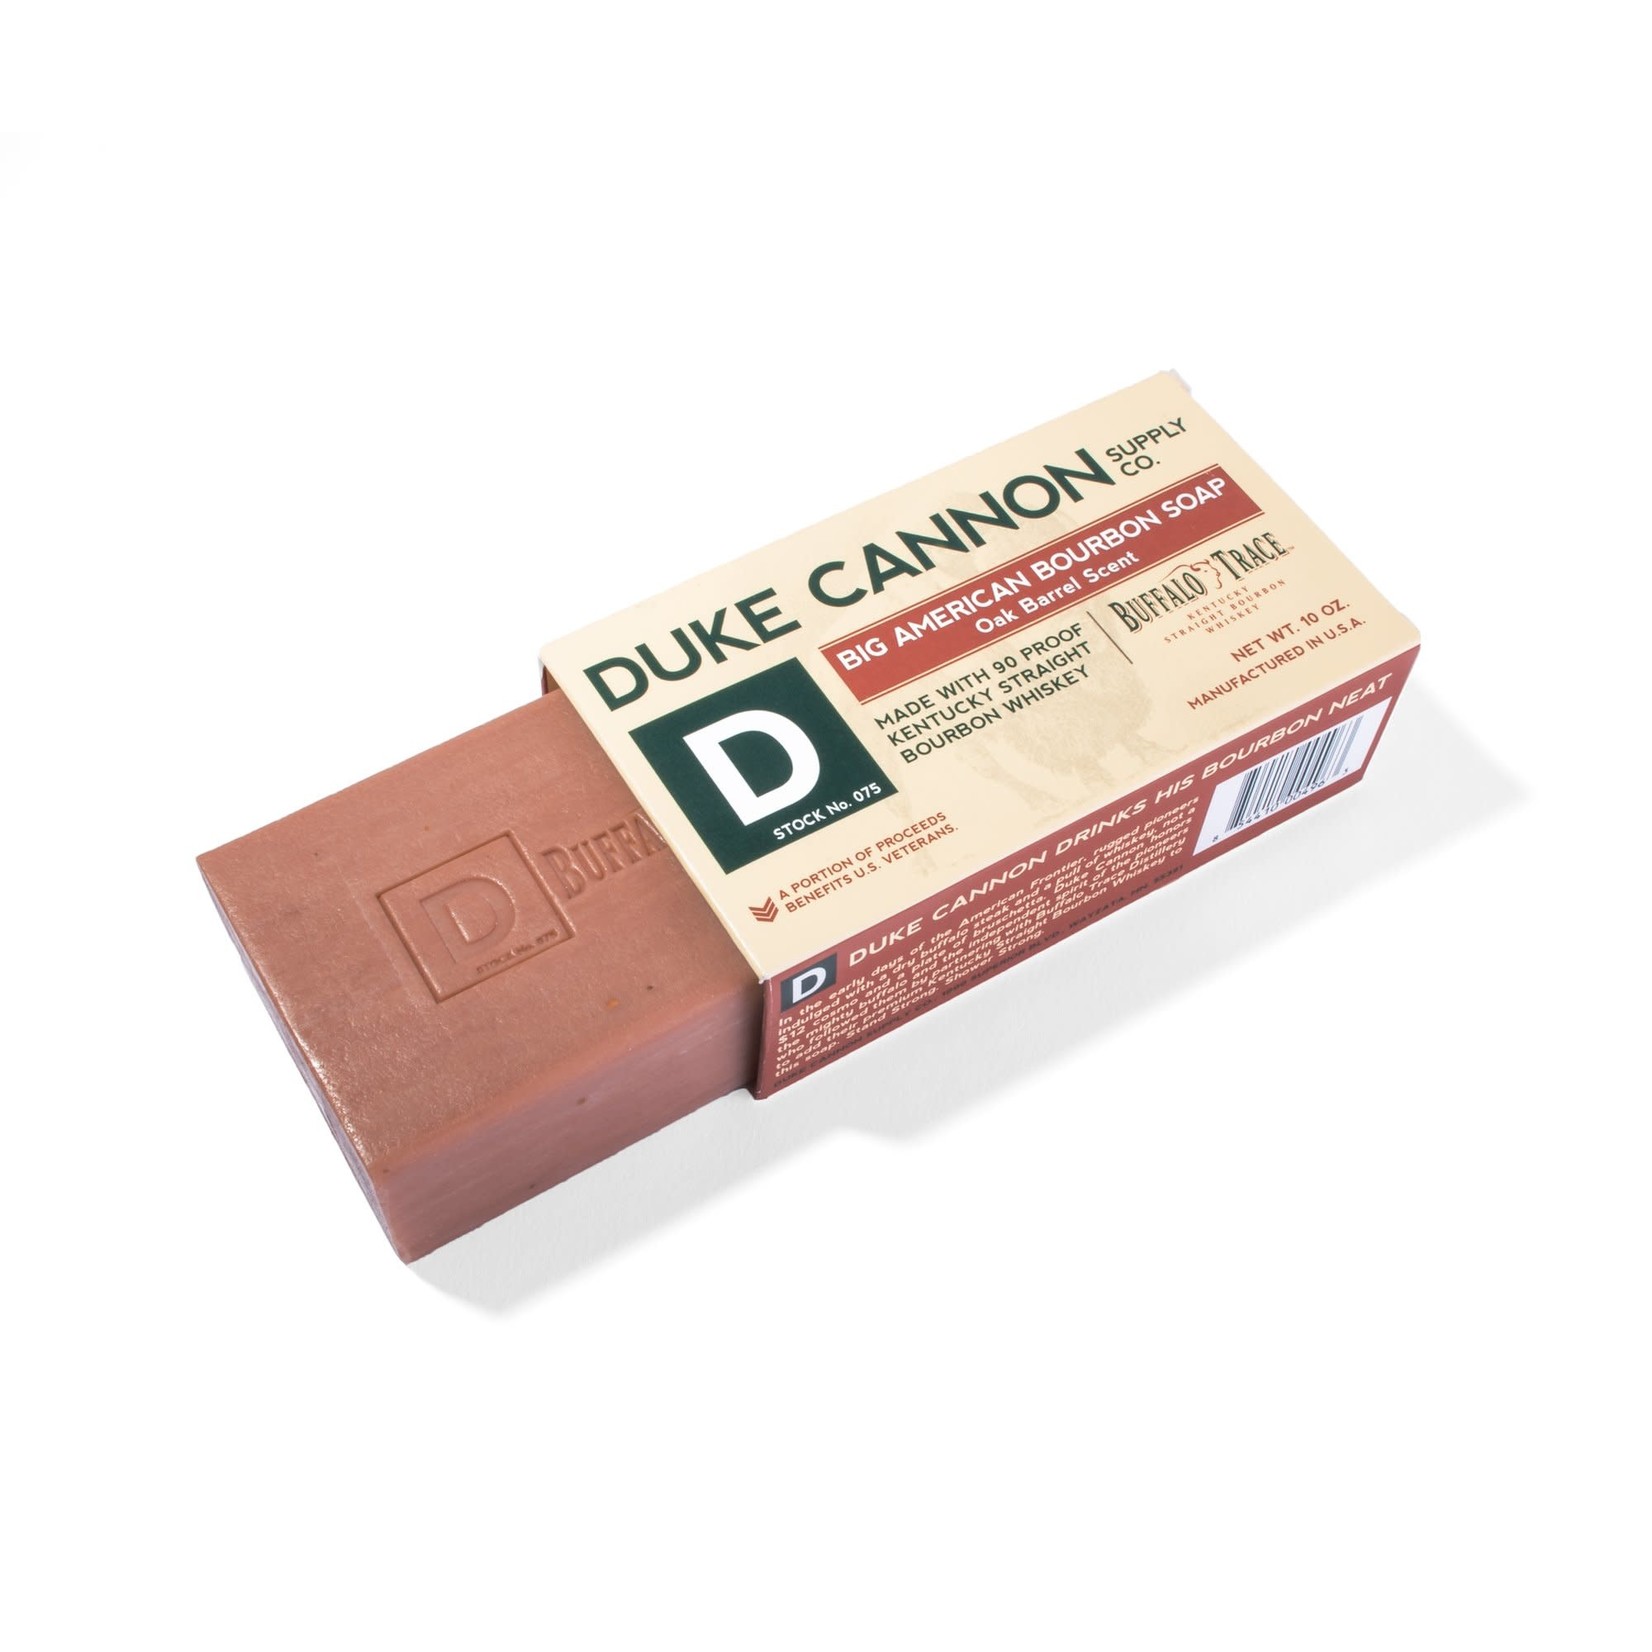 Duke Cannon Supply Co Big Ass Brick of Soap - Big American Bourbon